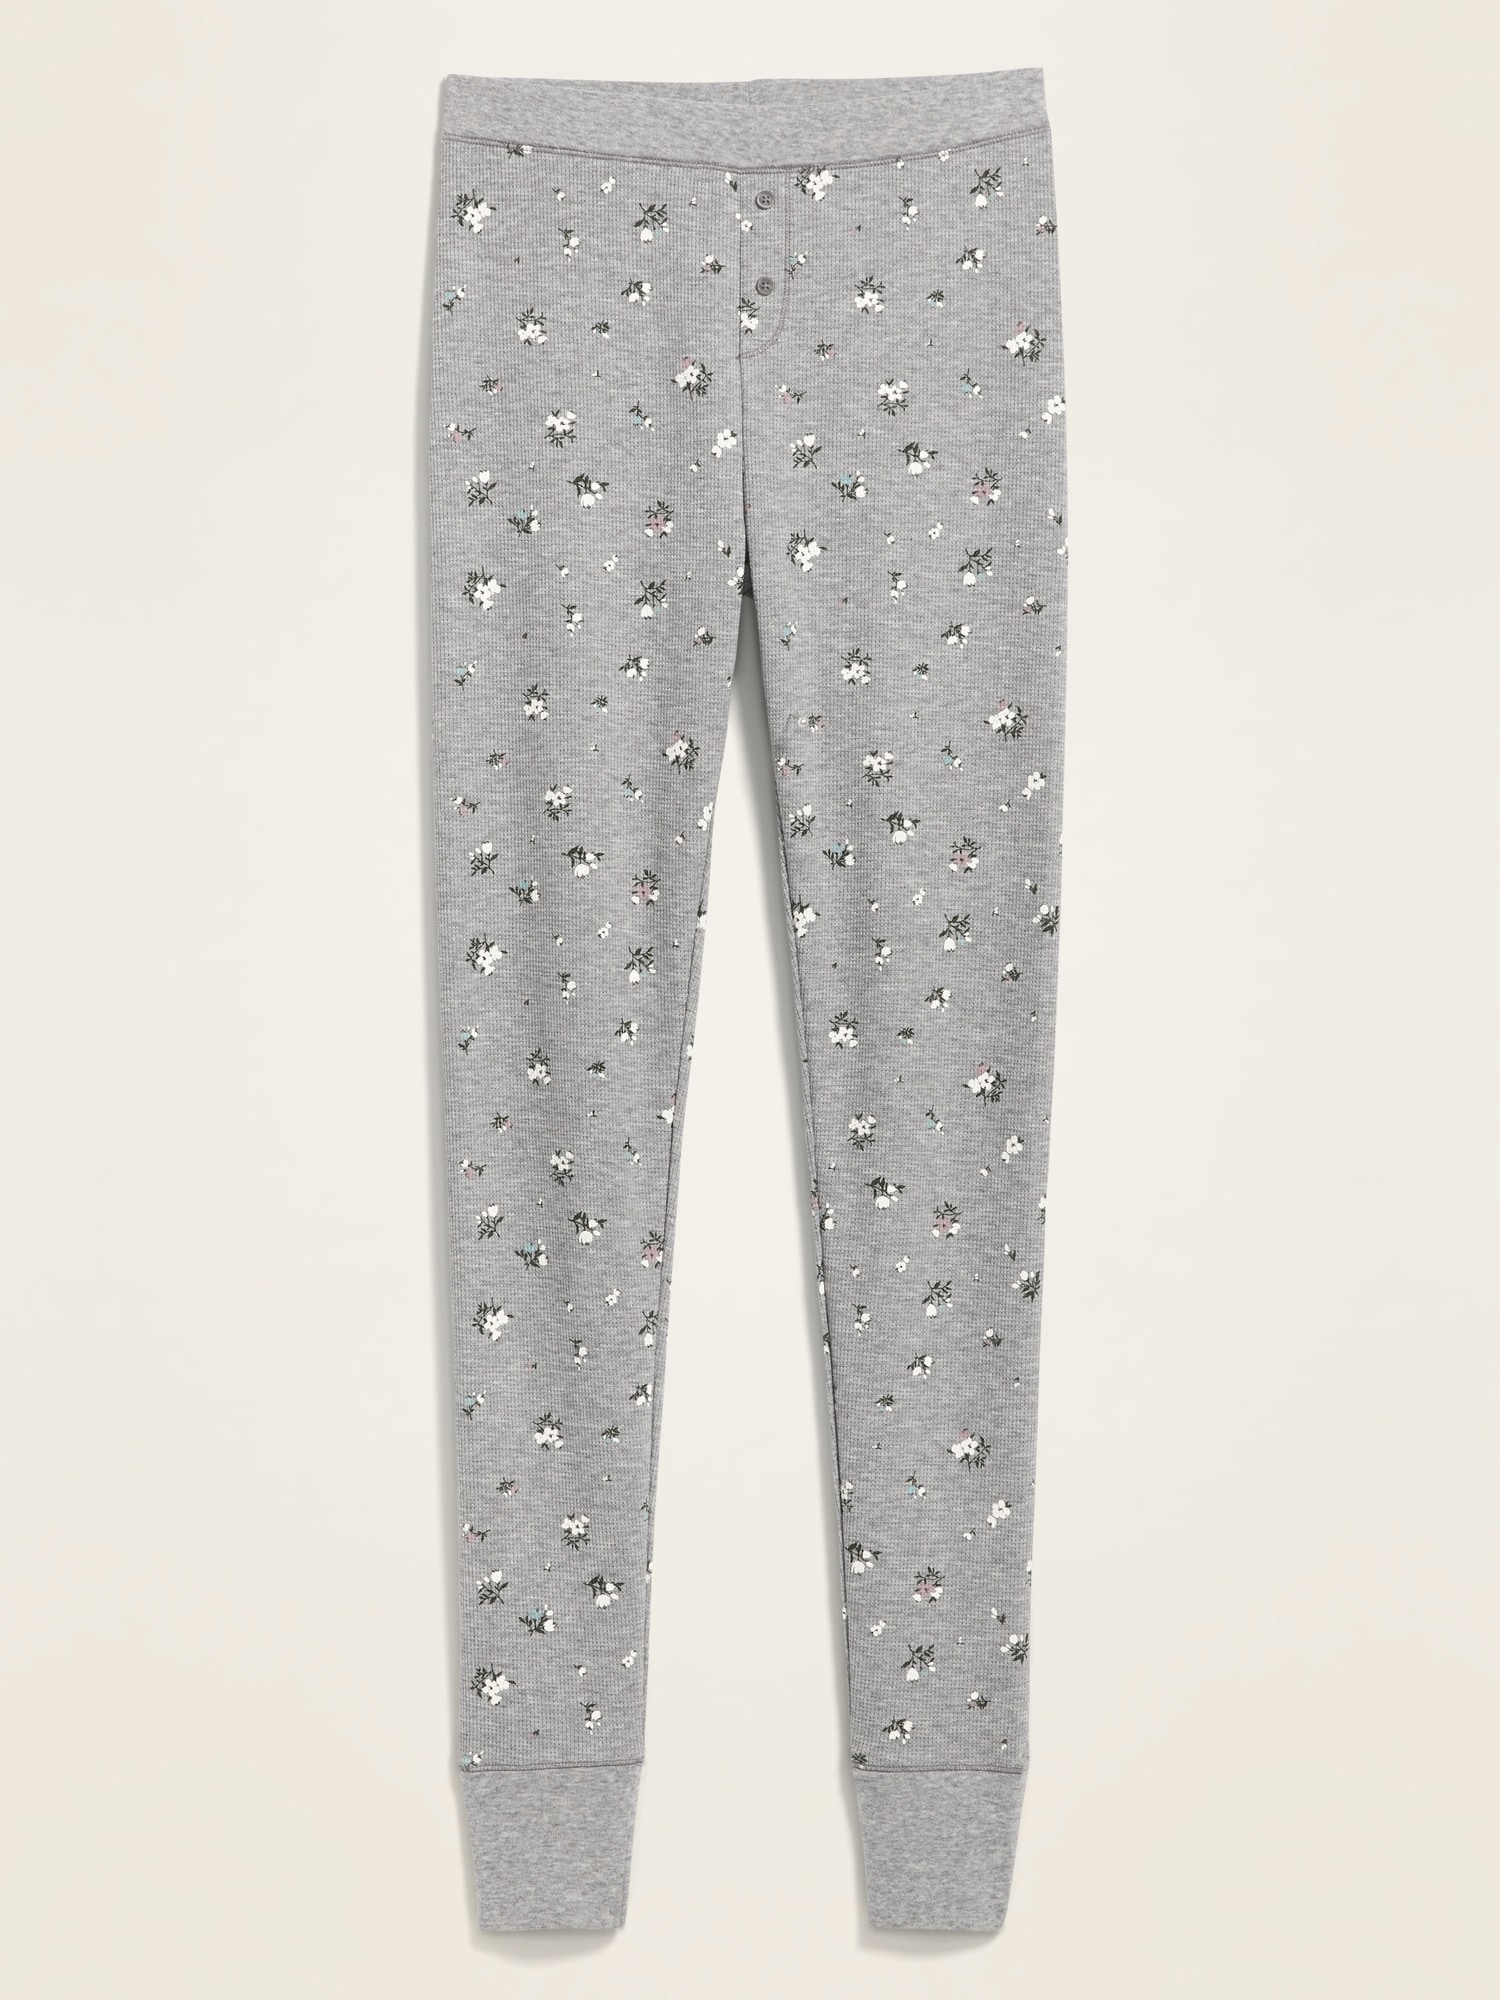 Old Navy - Matching Printed Thermal-Knit Pajama Leggings for Women